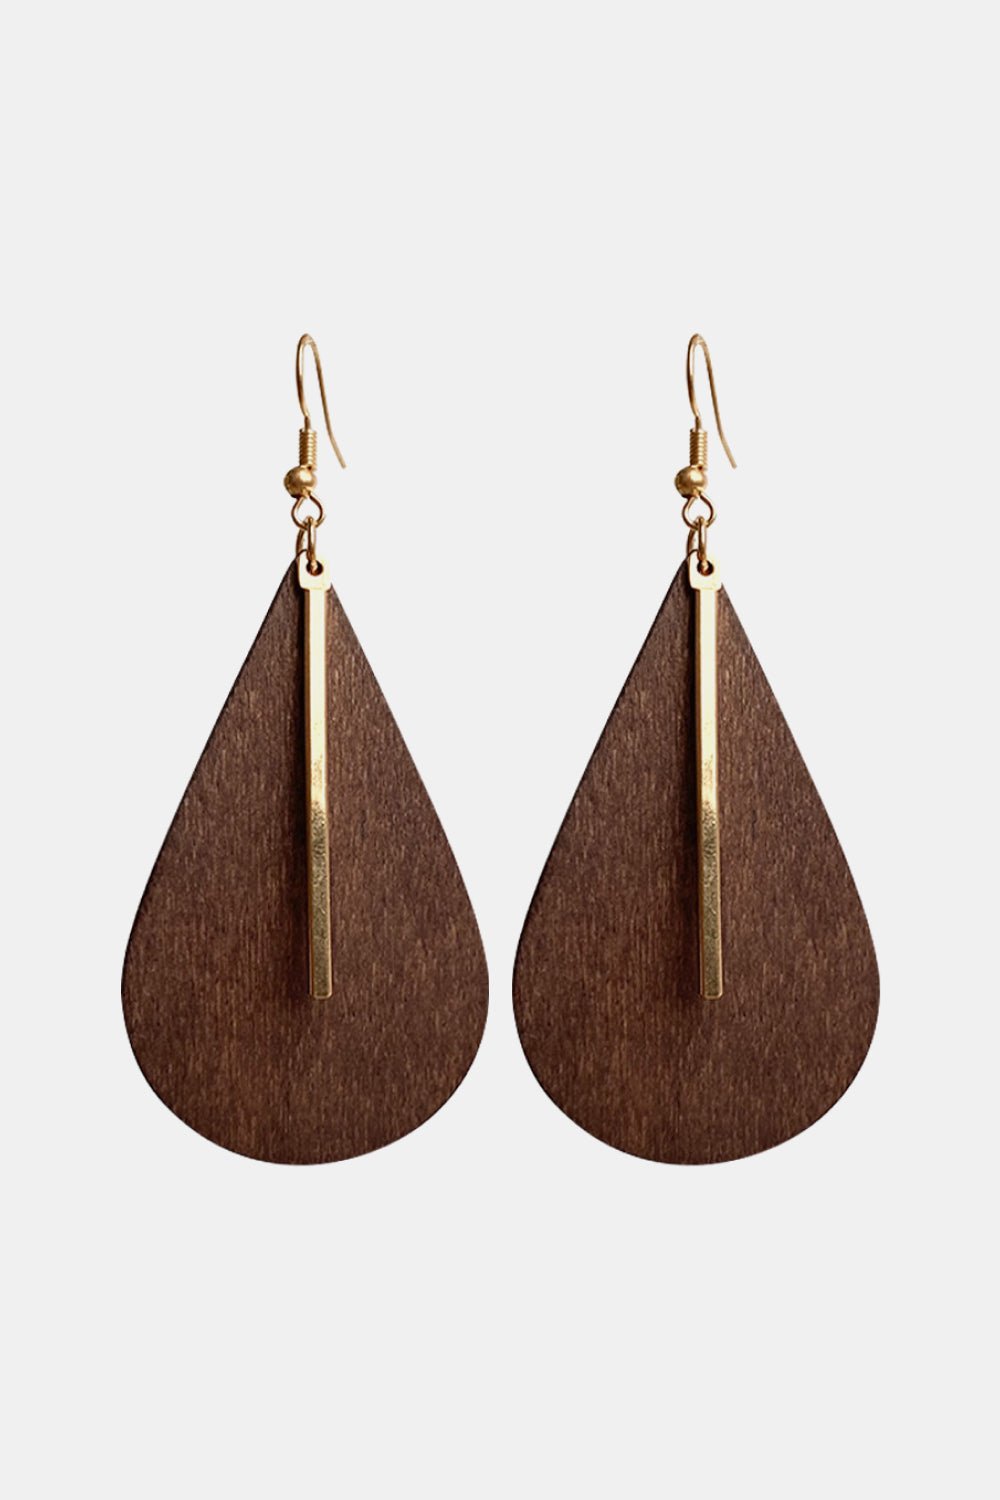 Geometrical Shape Wooden Dangle Earrings - London's Closet Boutique